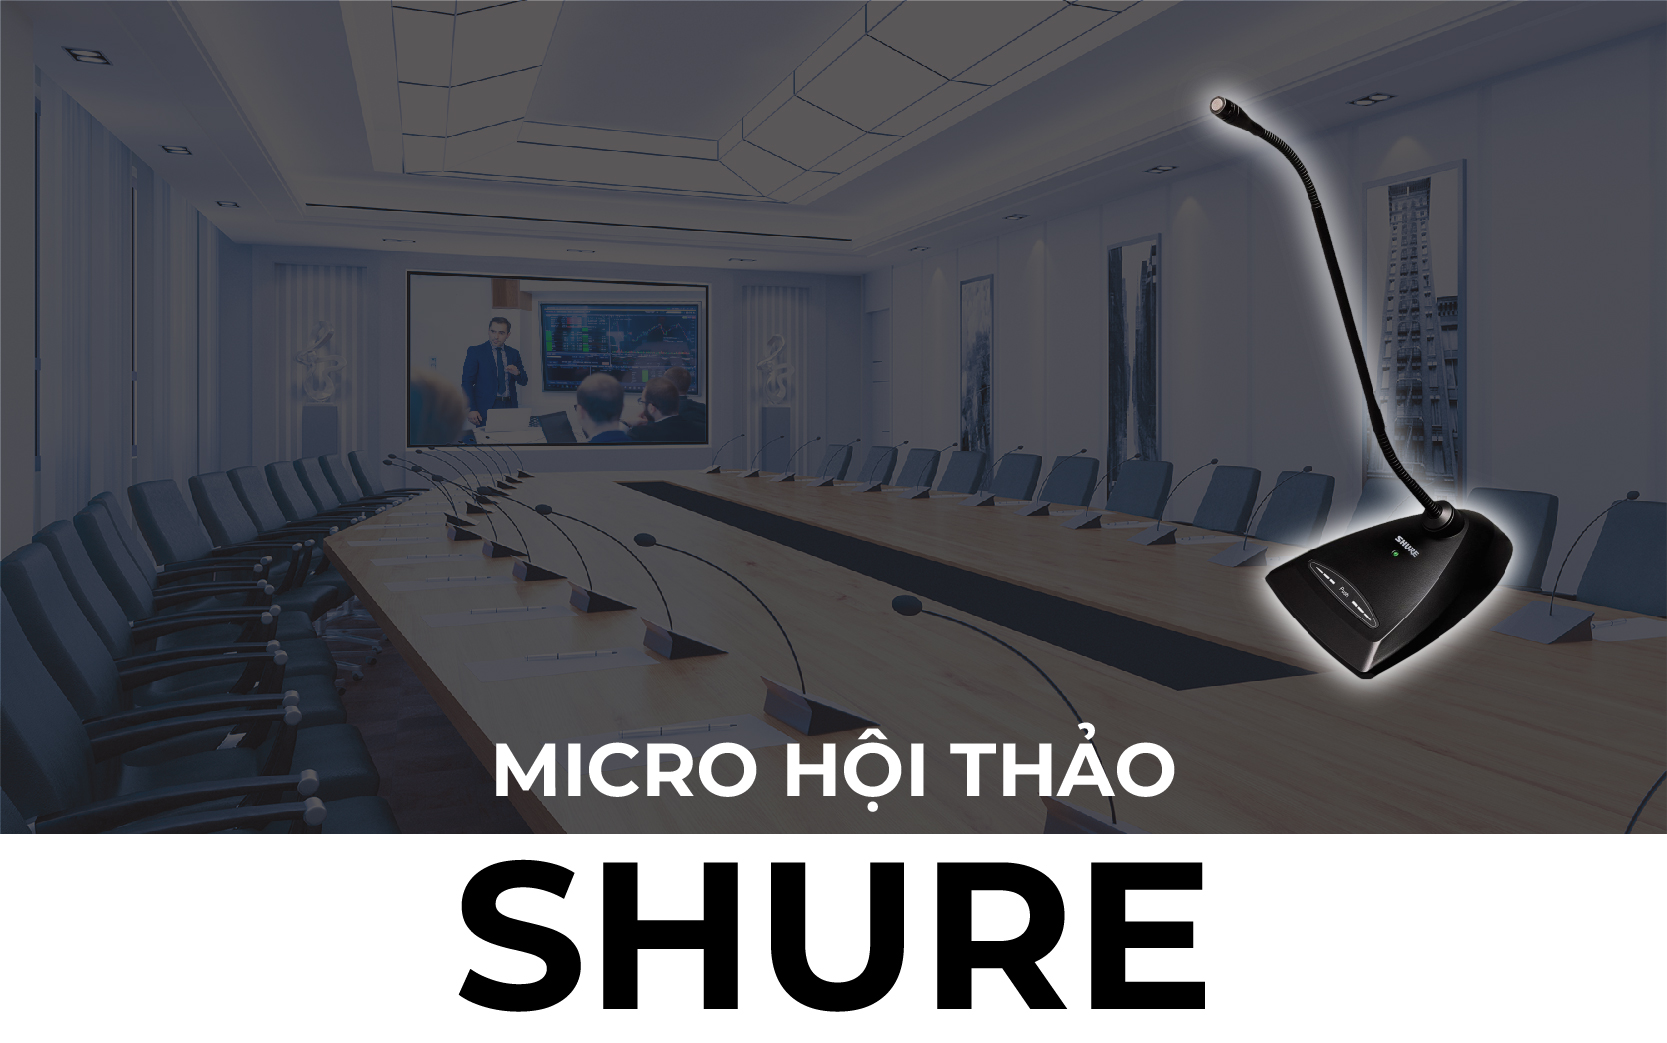  Micro hội thảo Shure